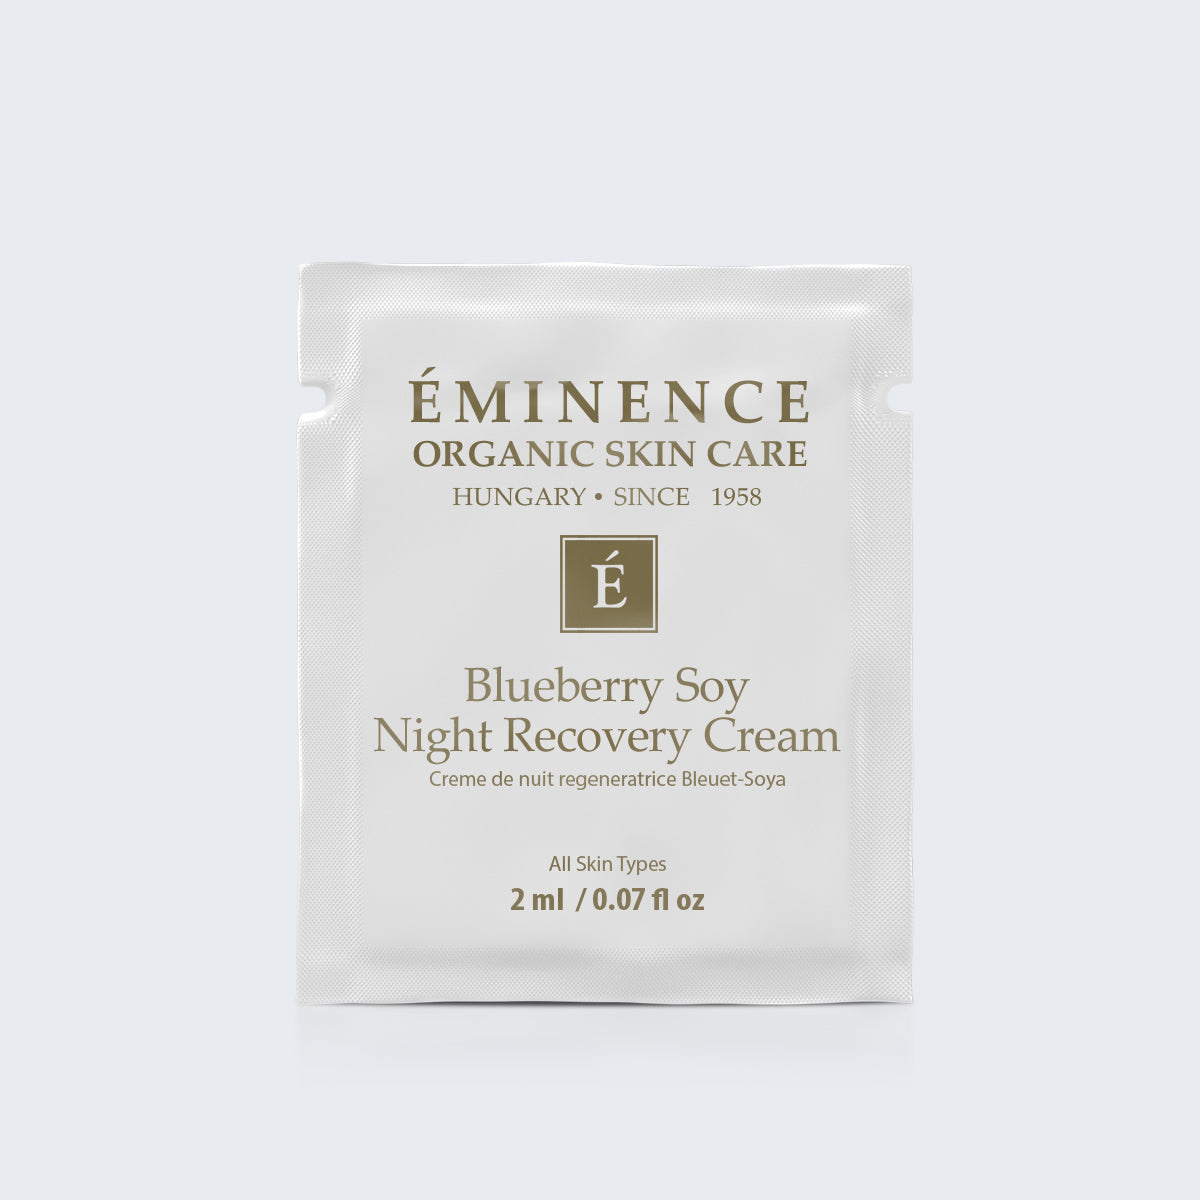 Eminence Organics Blueberry Soy Night Recovery Cream Card Sample